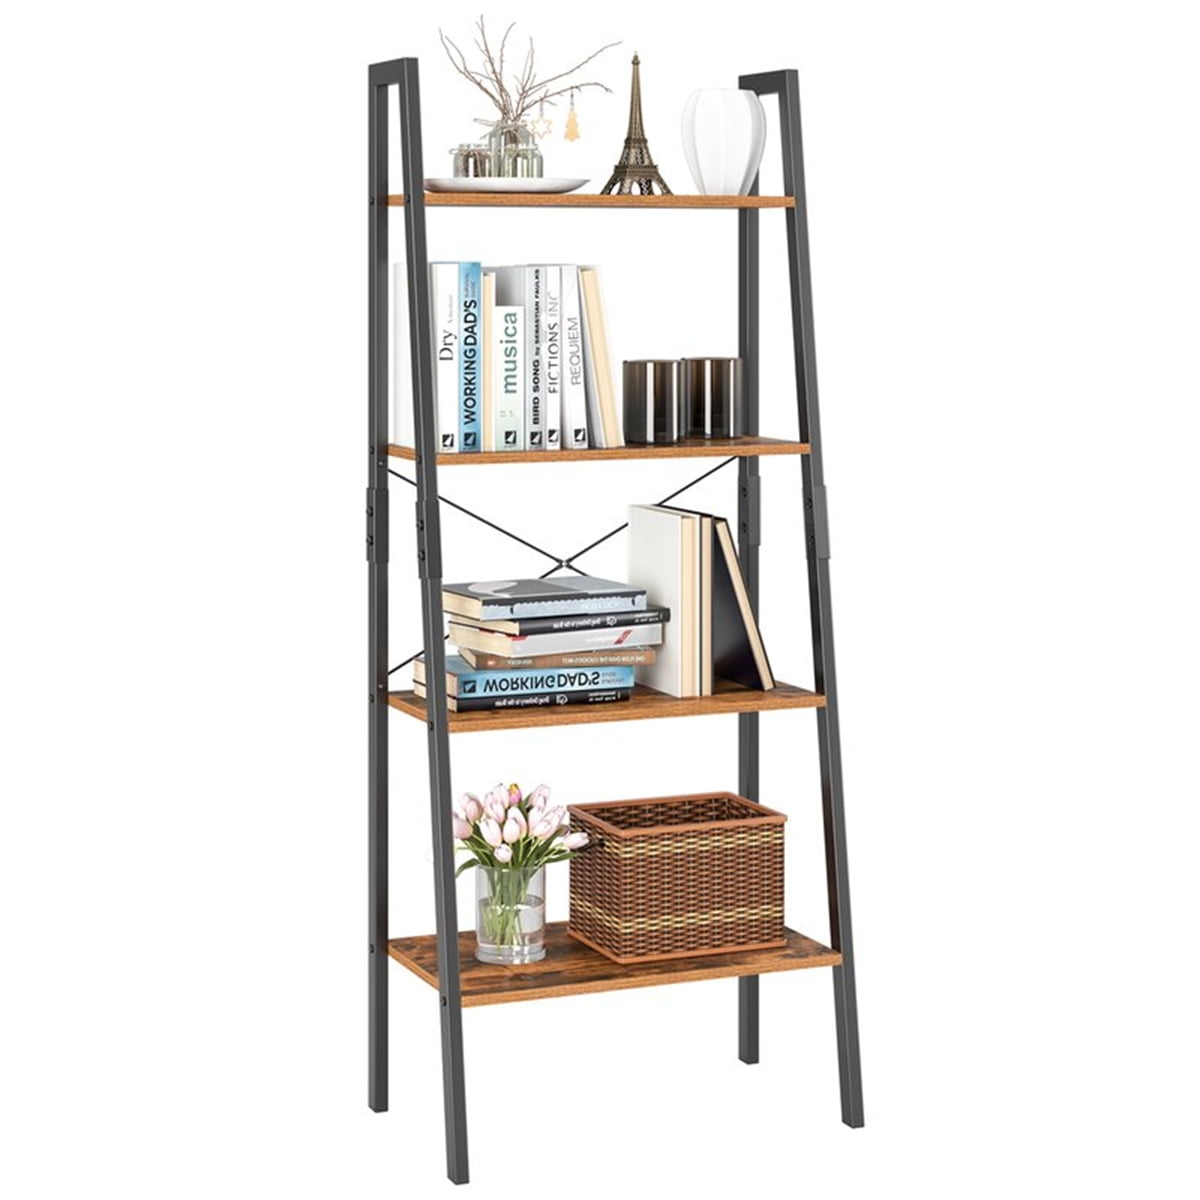 4-Tier Retro Metal Frame Bookshelf Tangkula Industrial Ladder Shelf Rustic Brown Multipurpose Bookcase Storage Organizer for Home Living Room Office 4-Tier Ladder Shelves